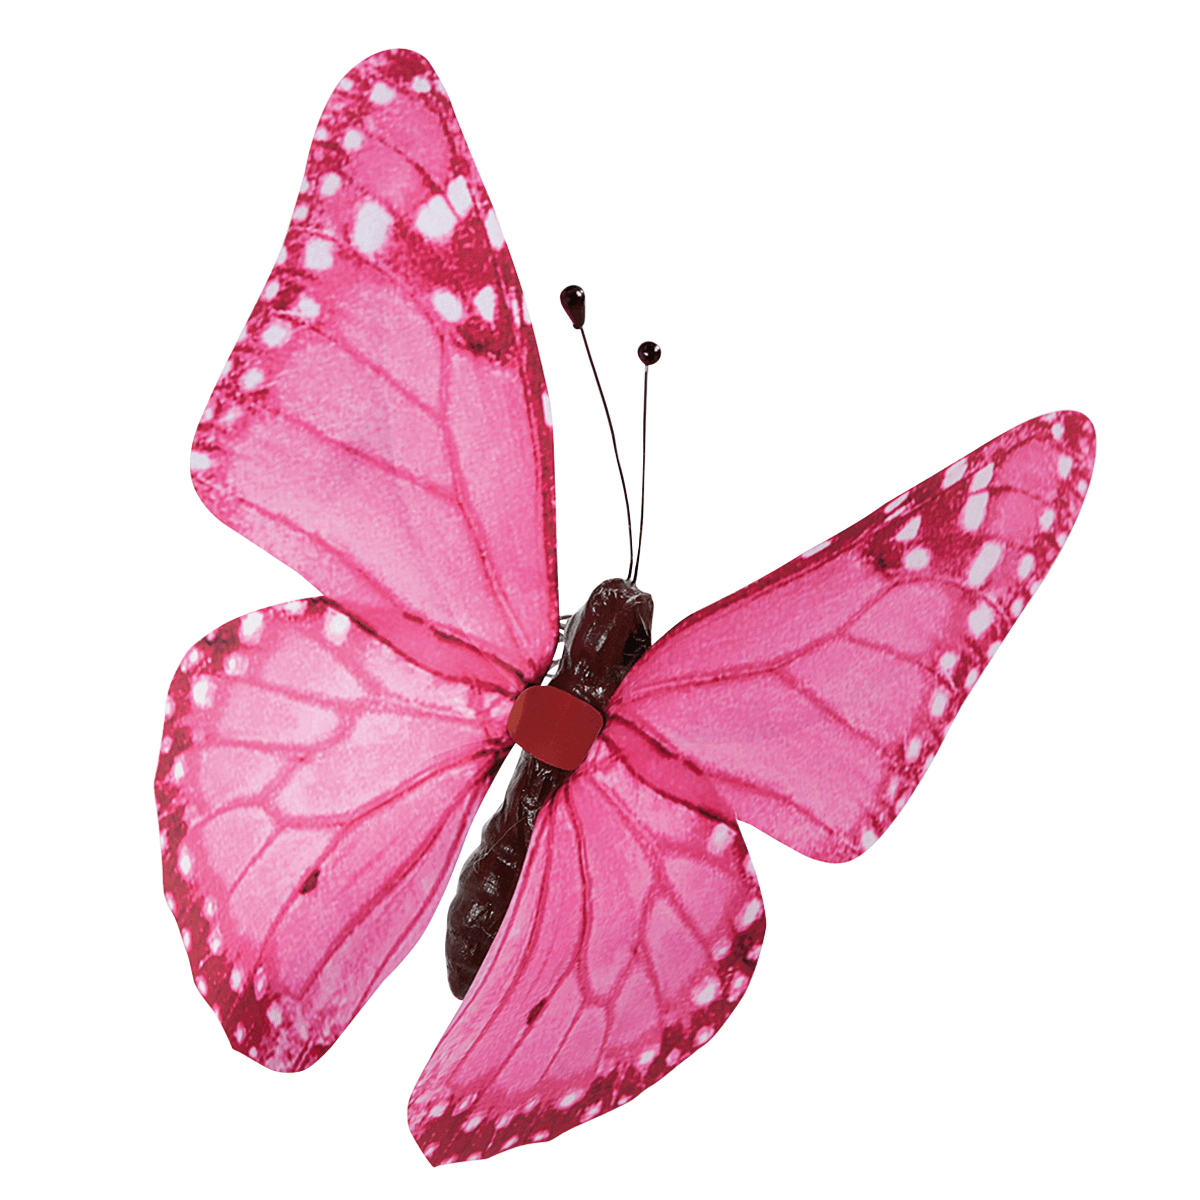 Solar-Schmetterling Bella pink jetzt bei Weltbild.de bestellen